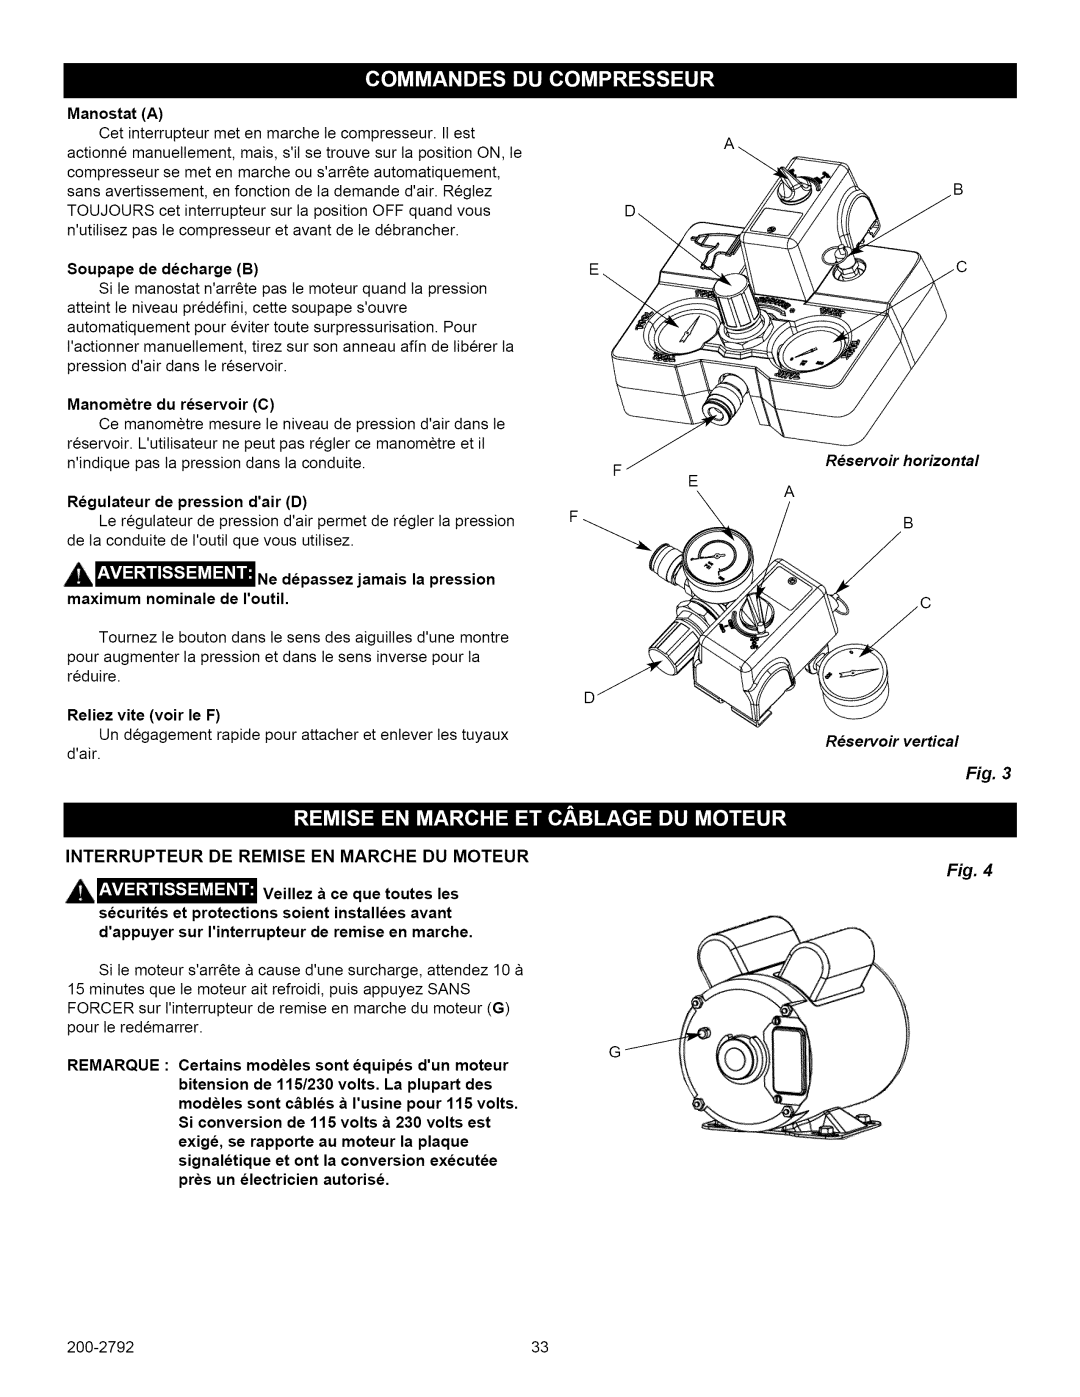 Craftsman 921.16475, 921.16474 owner manual Interrupteur De Remise En Marche Du Moteur, Reservoir vertical 